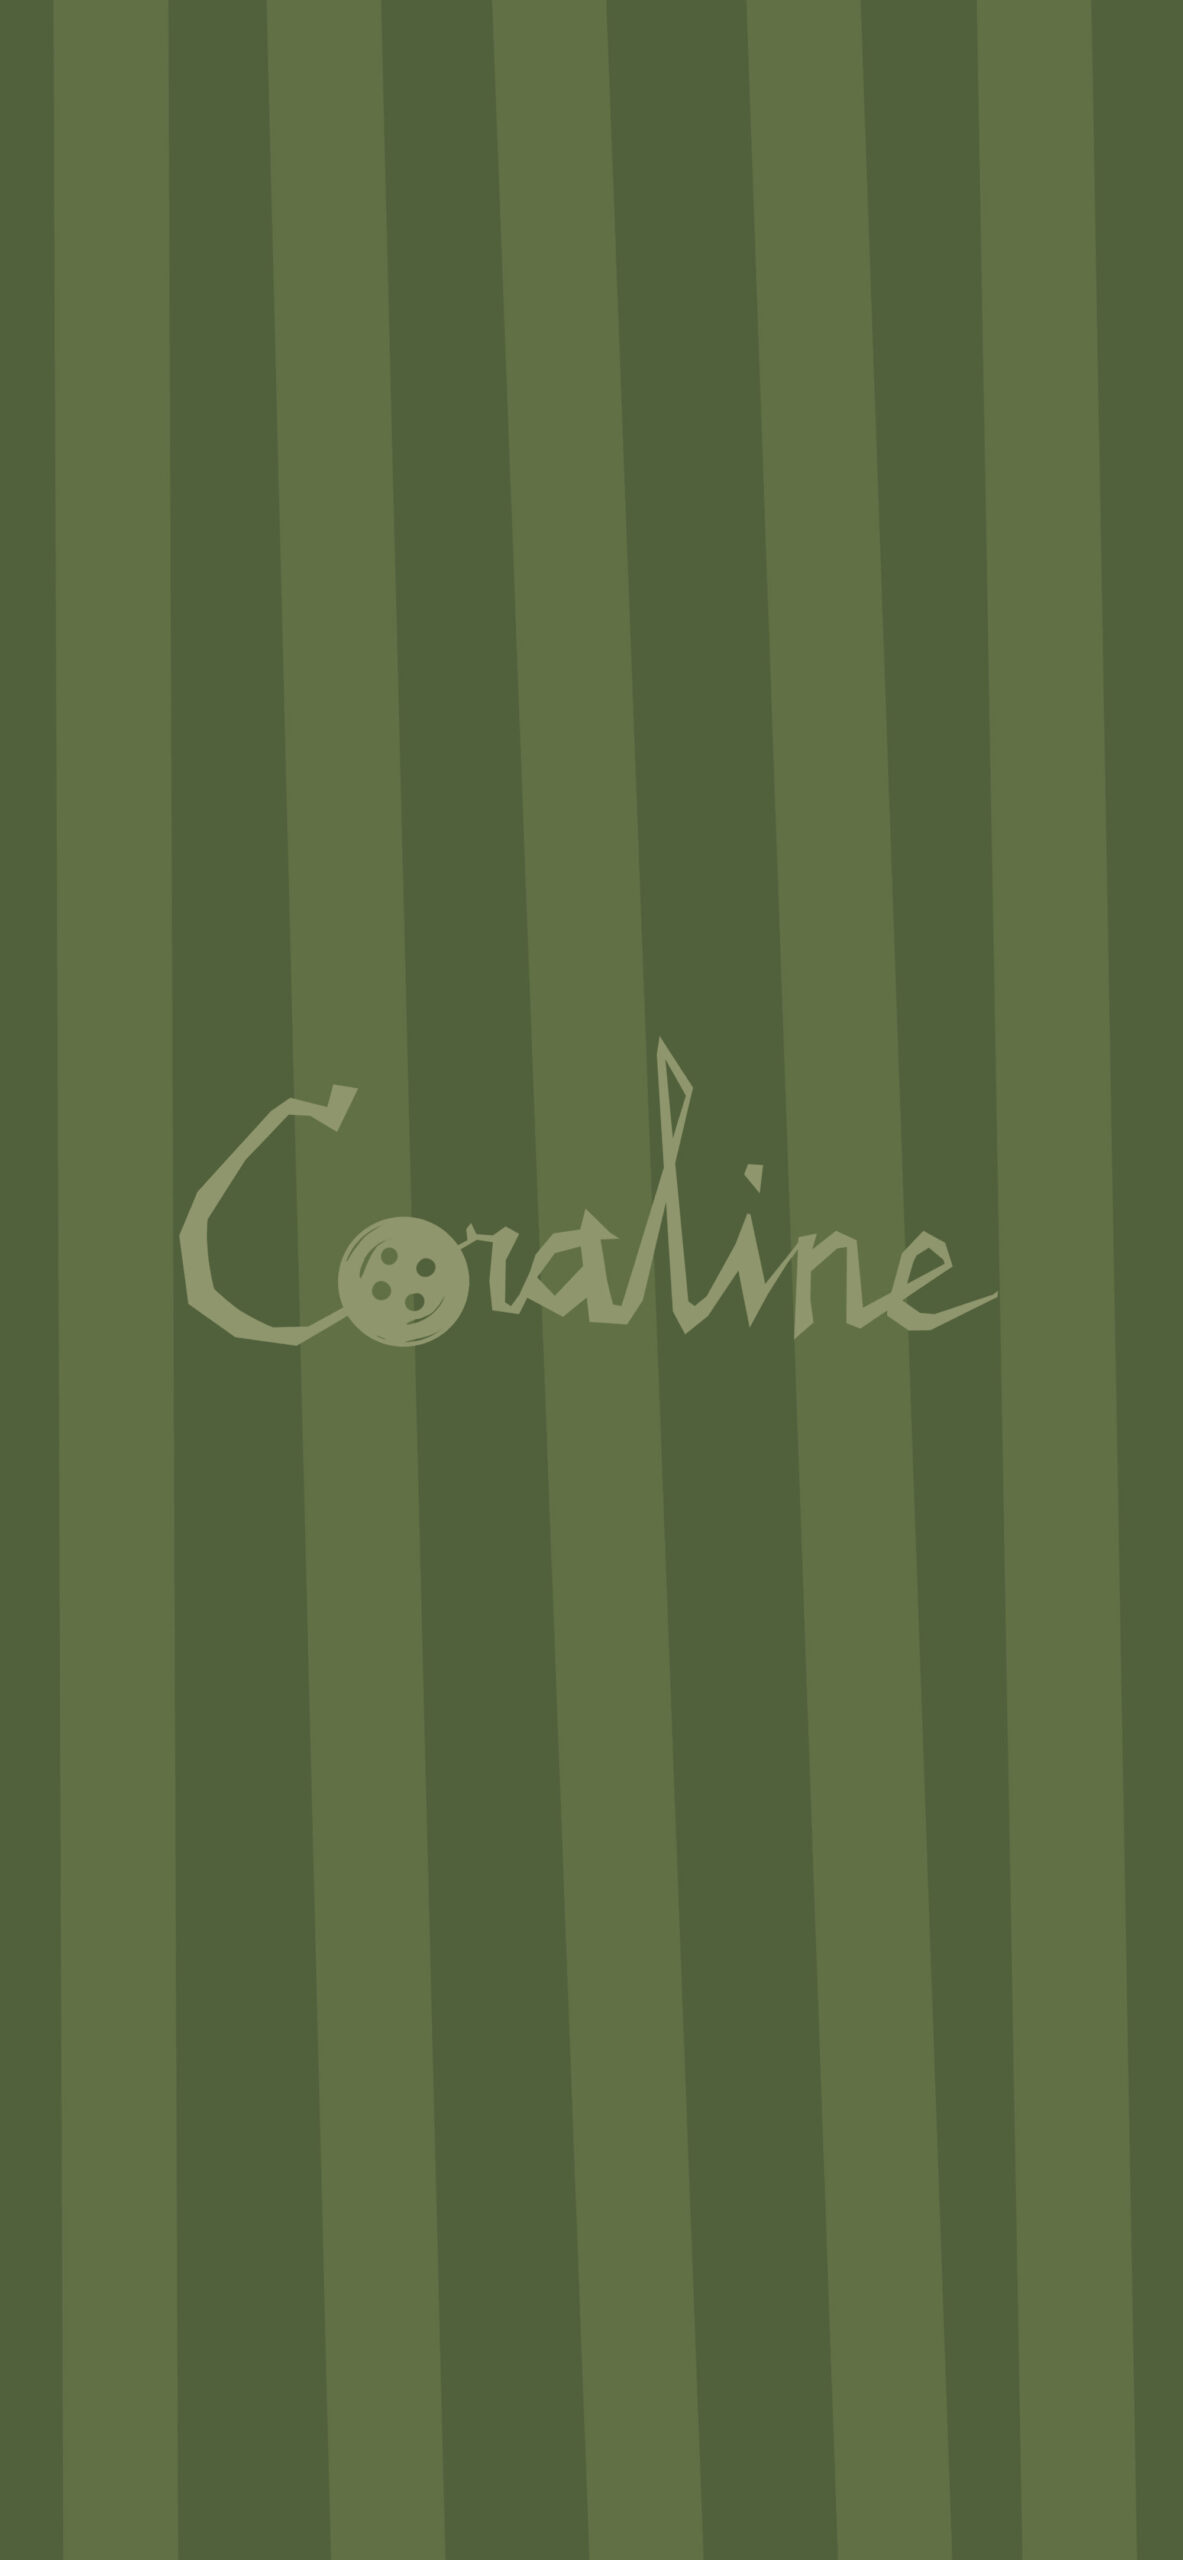 coraline logo green wallpaper 2